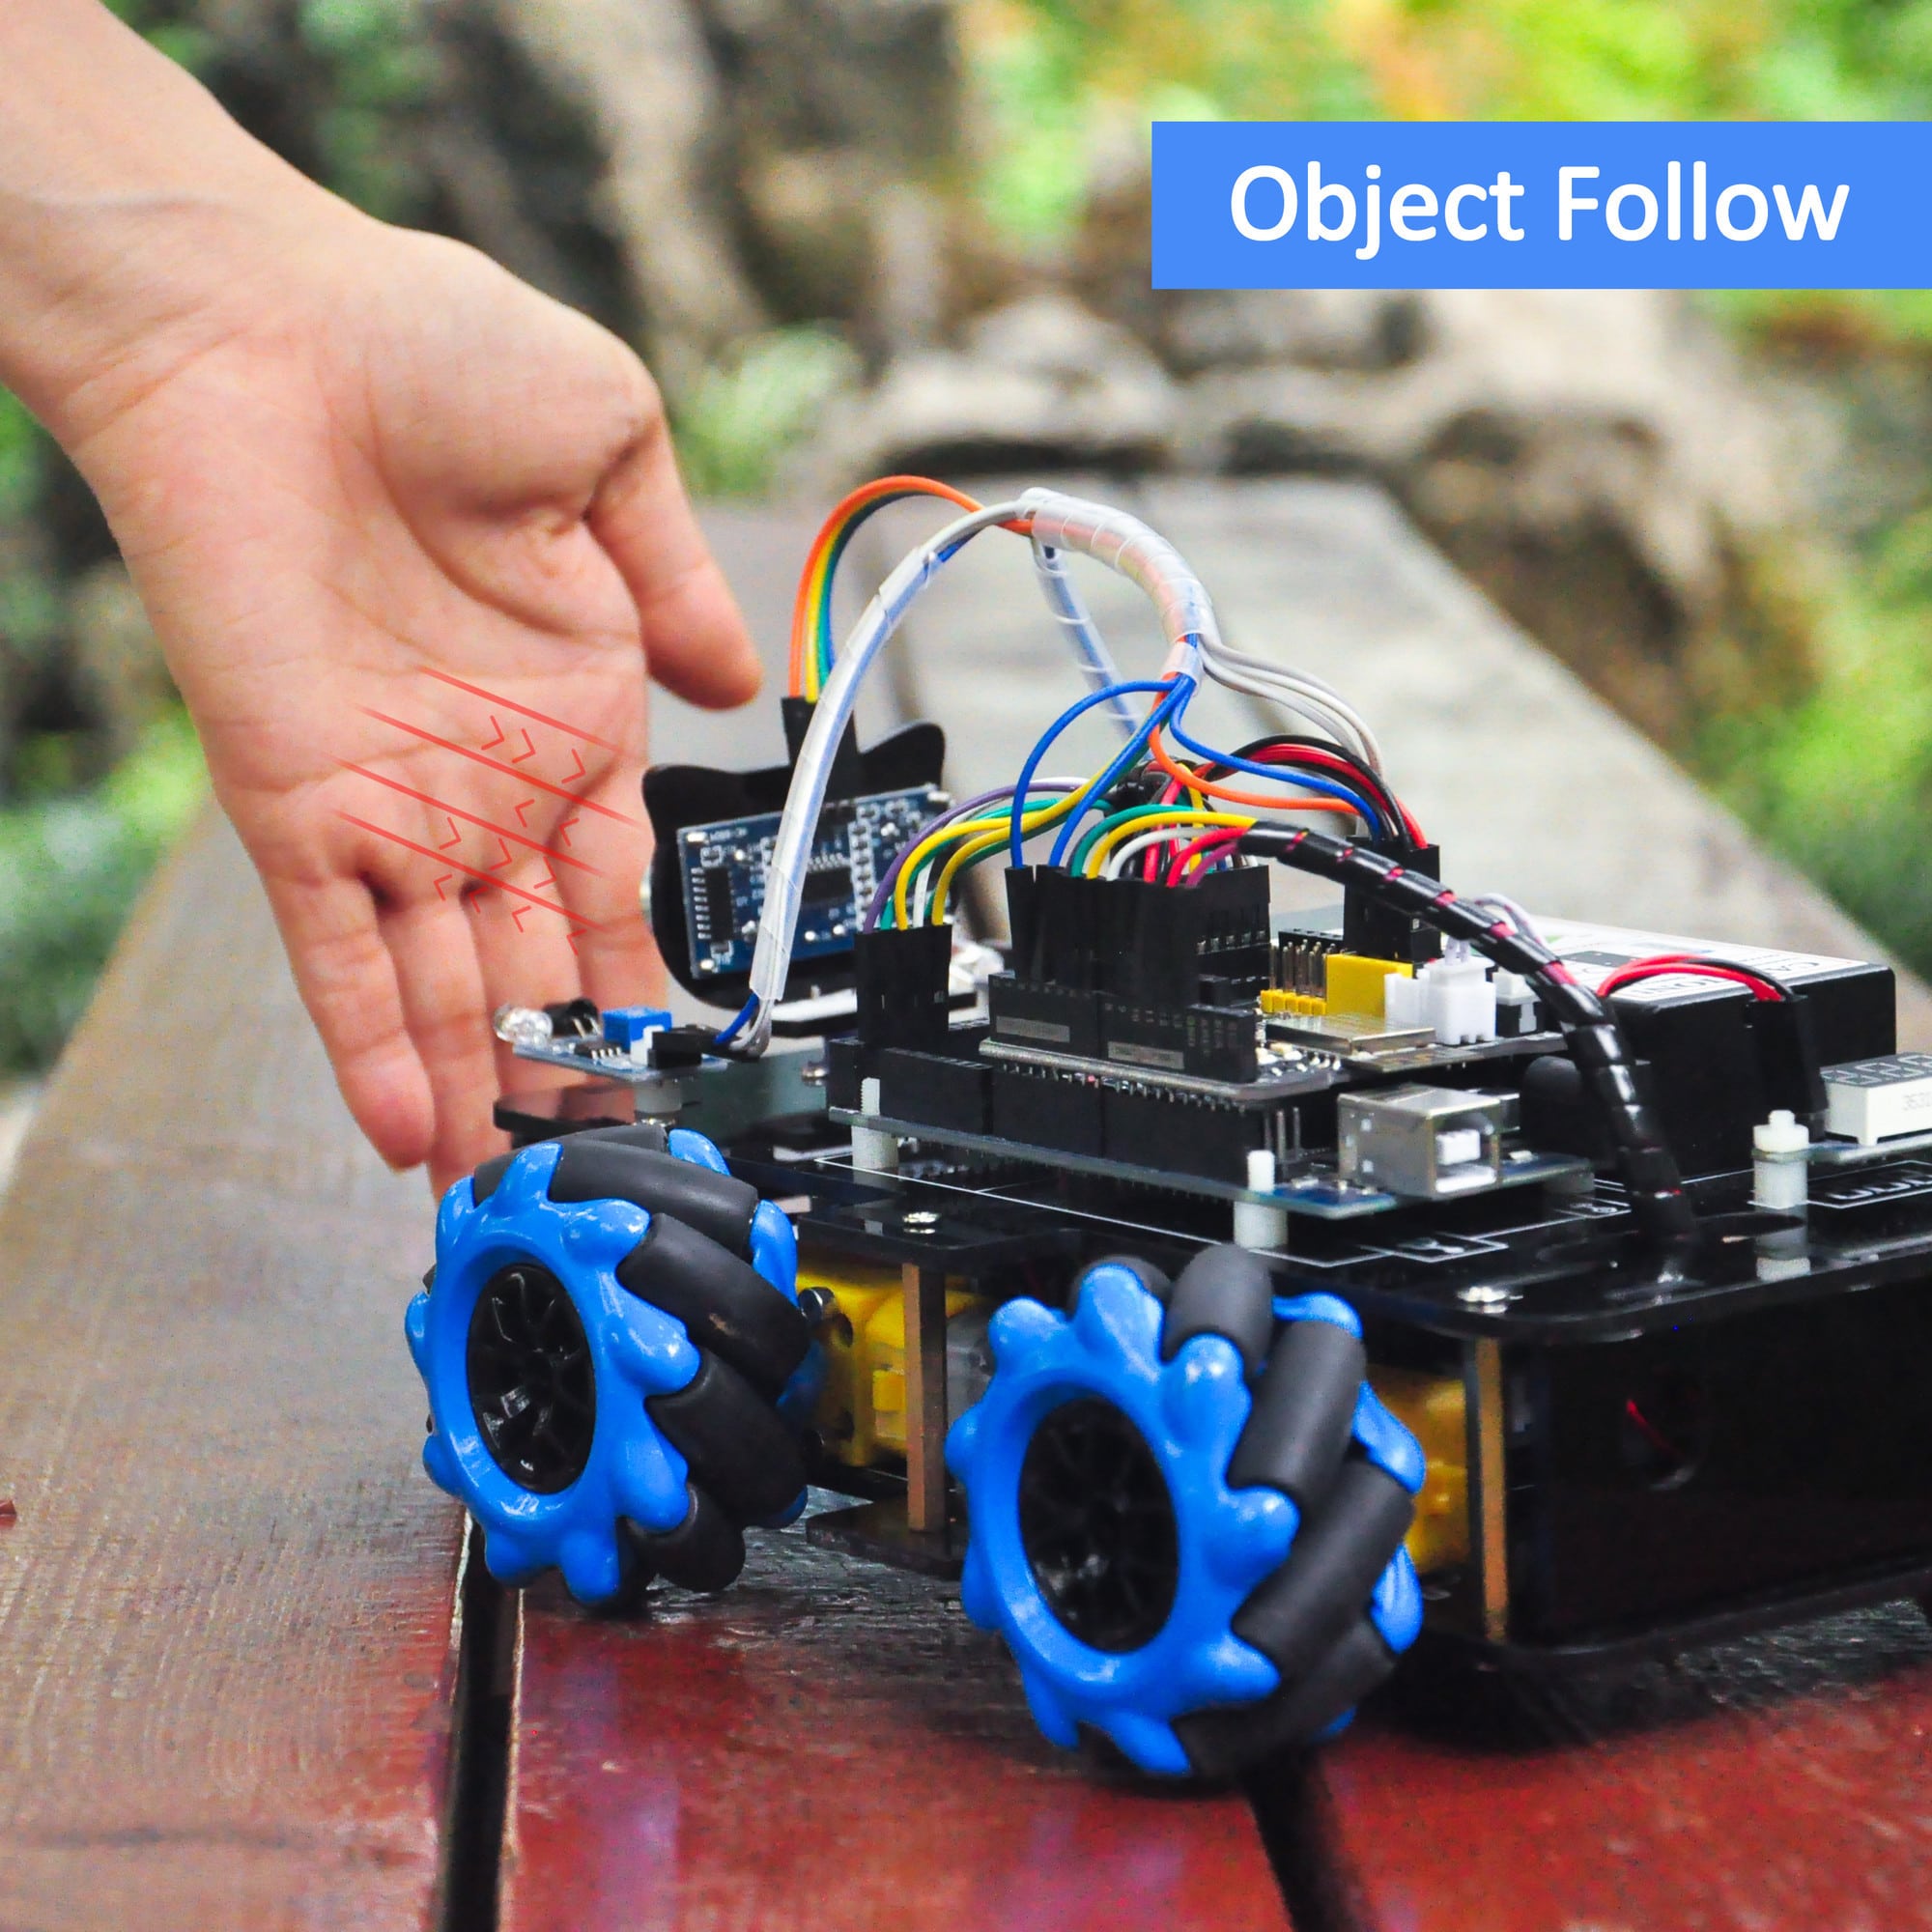 V2.0 Mecanum Wheel Roboter-Kit für Arduino Mega2560 - Lektion 4: Objekt folgender Roboterwagen